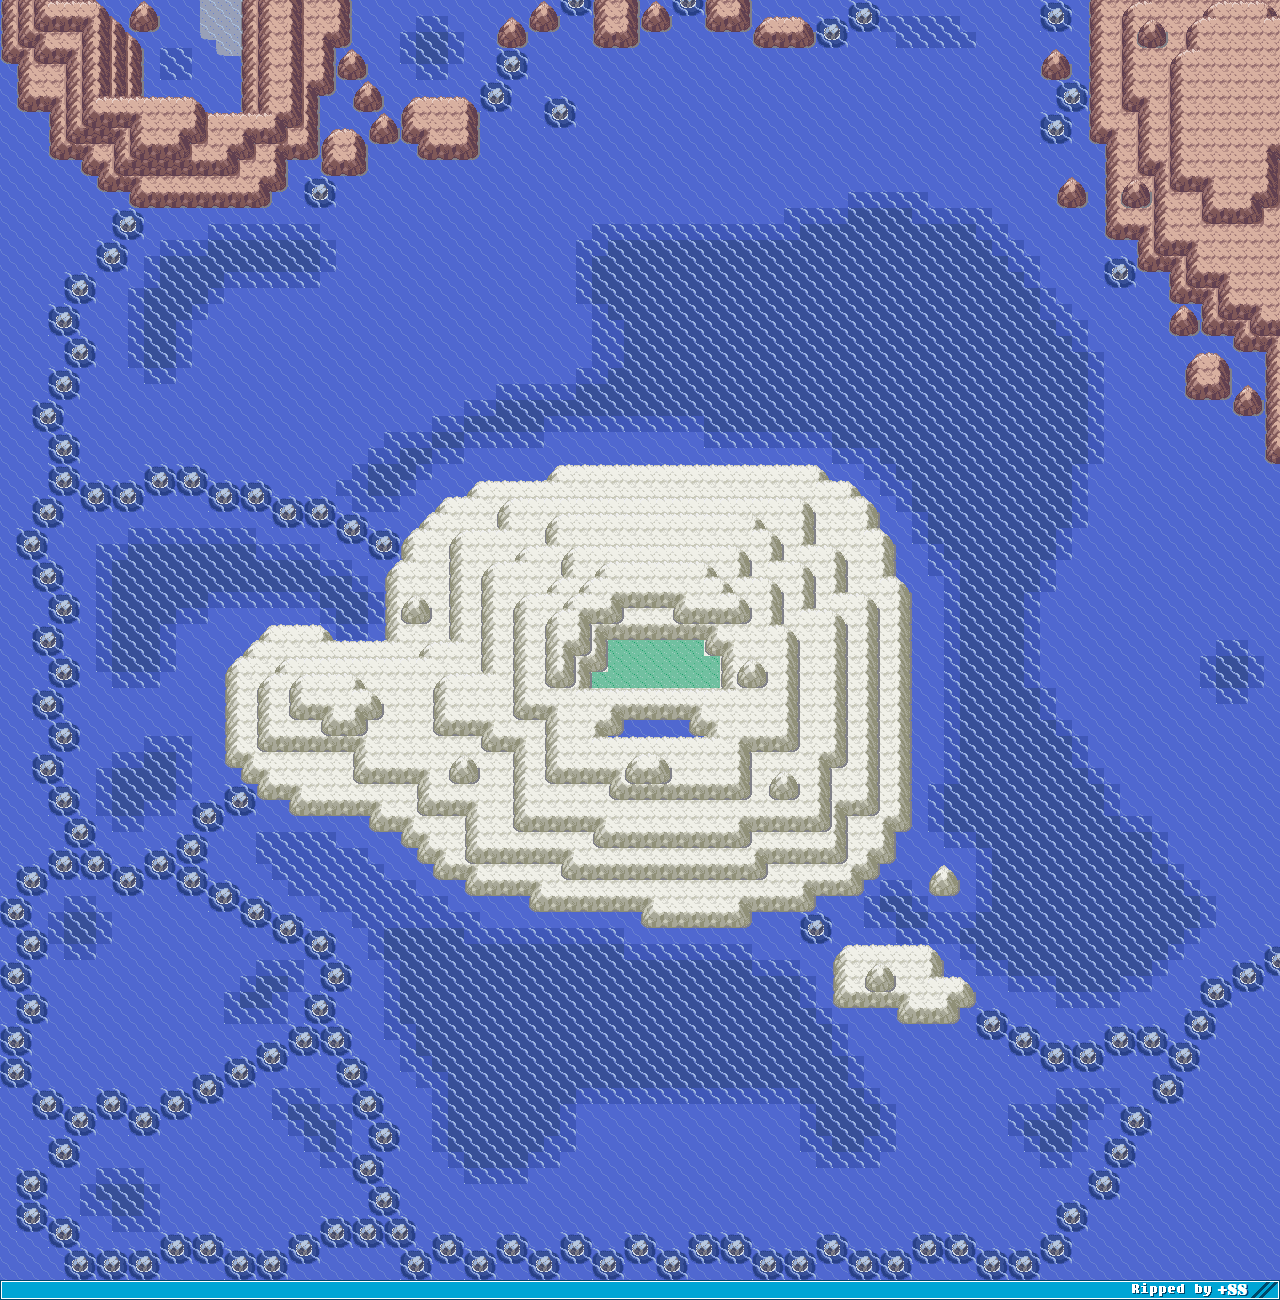 Game Boy Advance - Pokémon Quartz (Hack) - Sea Cavern - The